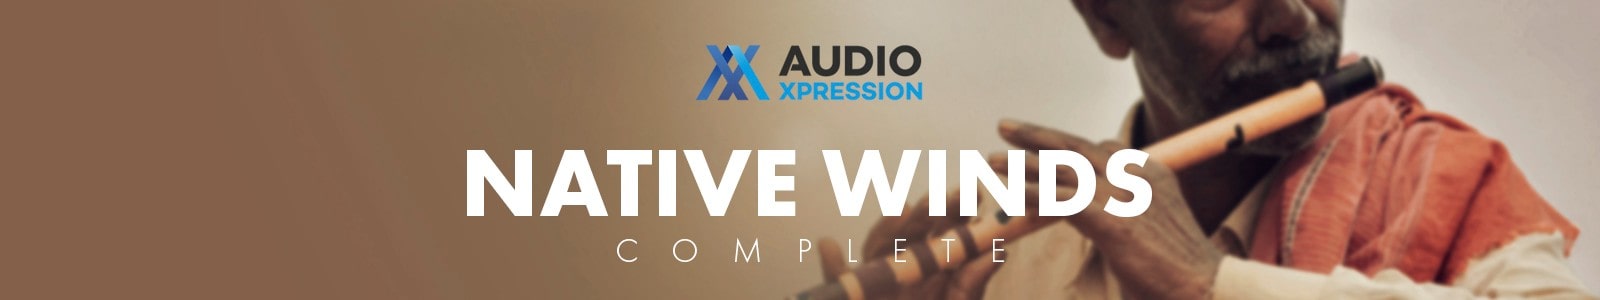 Audio Xpression Native Winds Complete